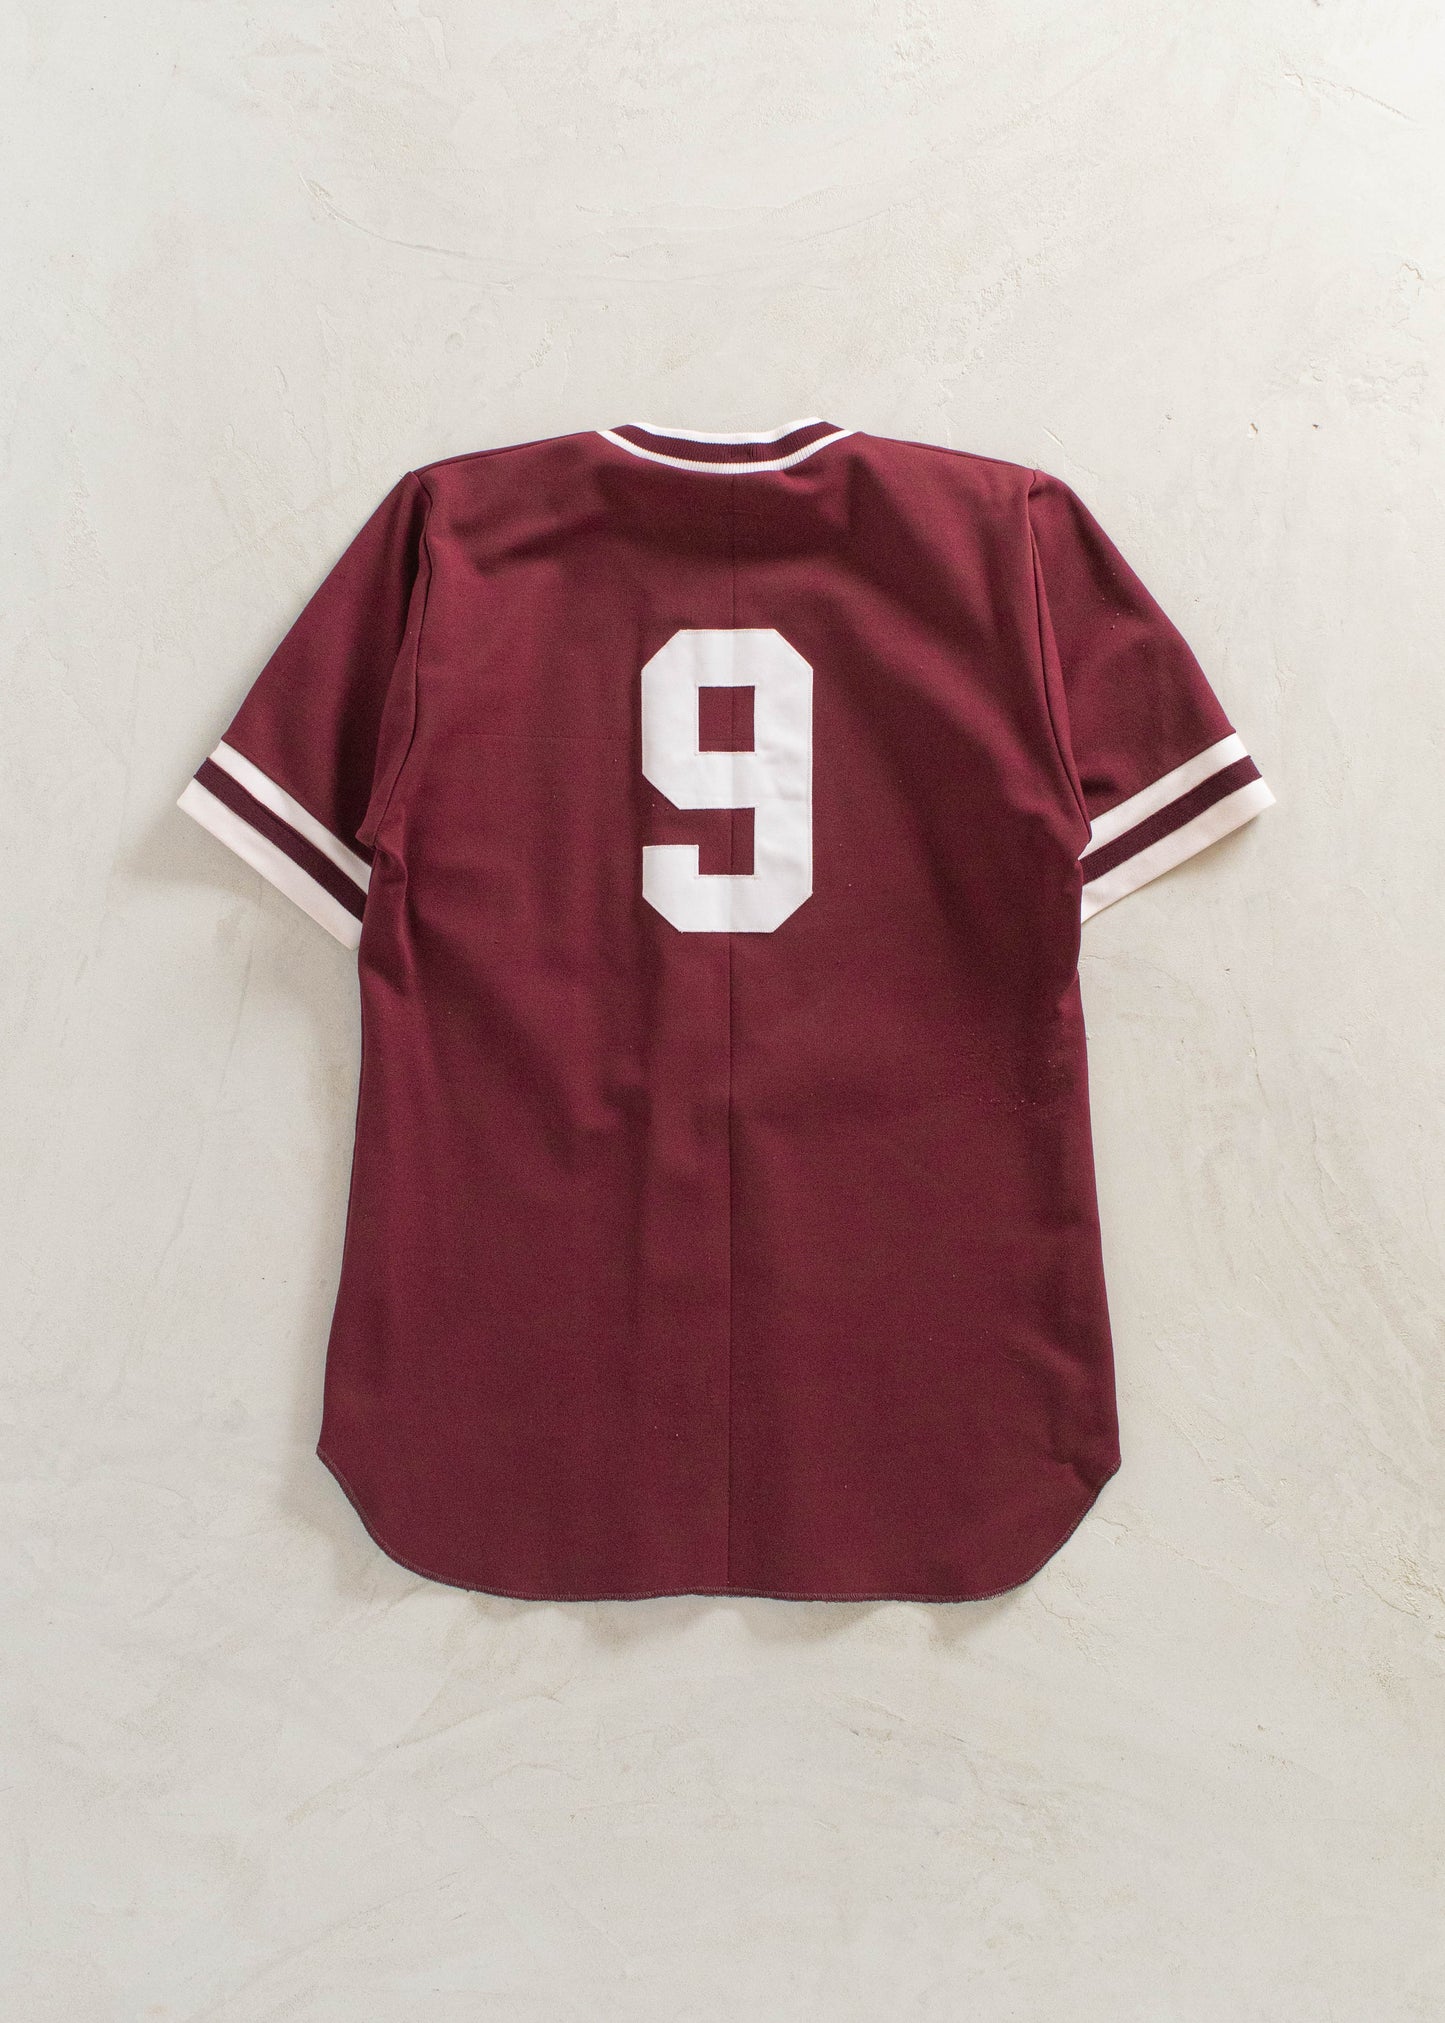 1970s Van Ginkels Short Sleeve Sport Jersey Size M/L